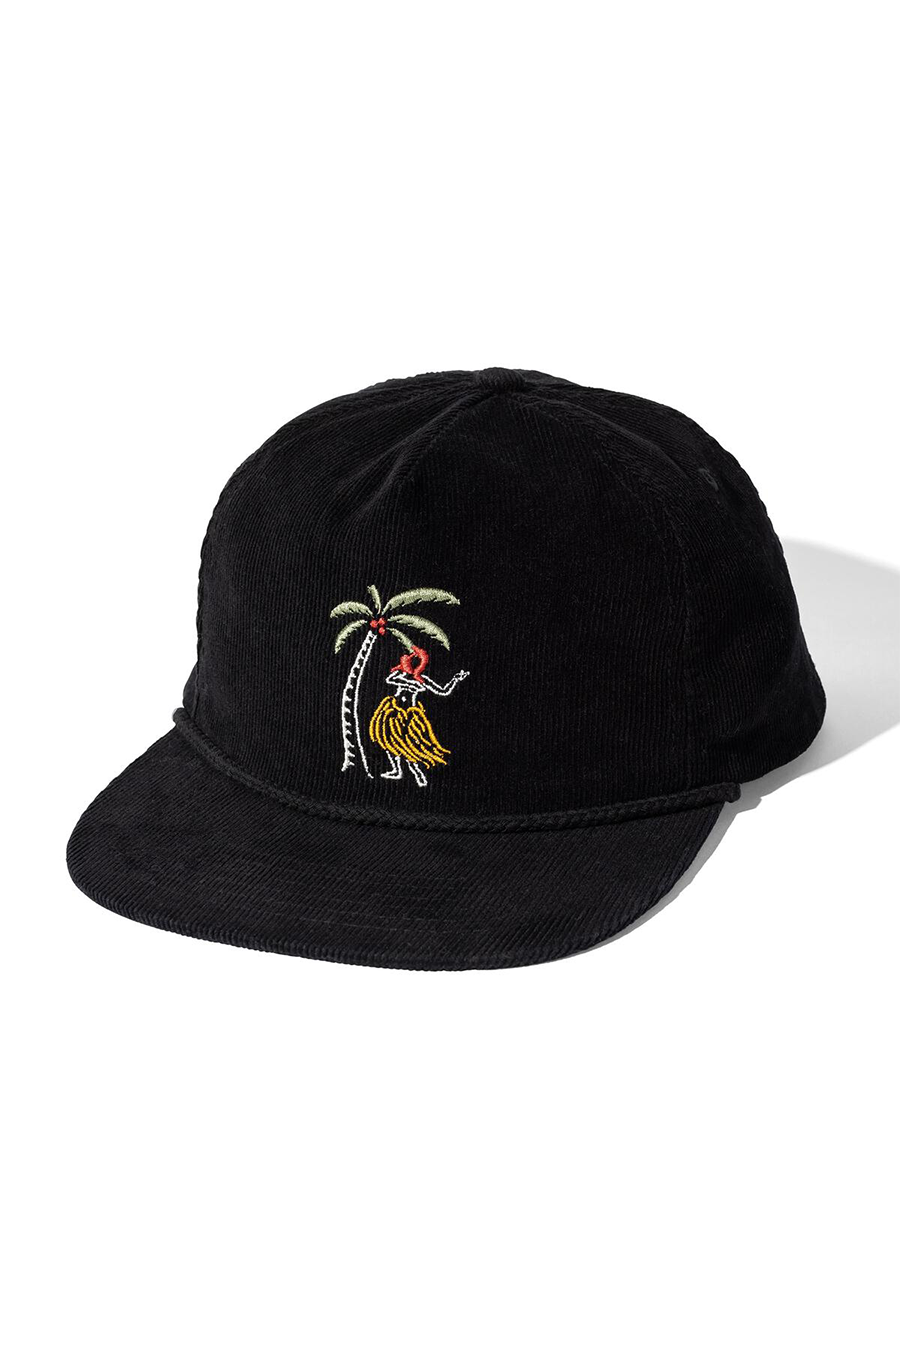 Mahalo Hat | Black - Main Image Number 1 of 1